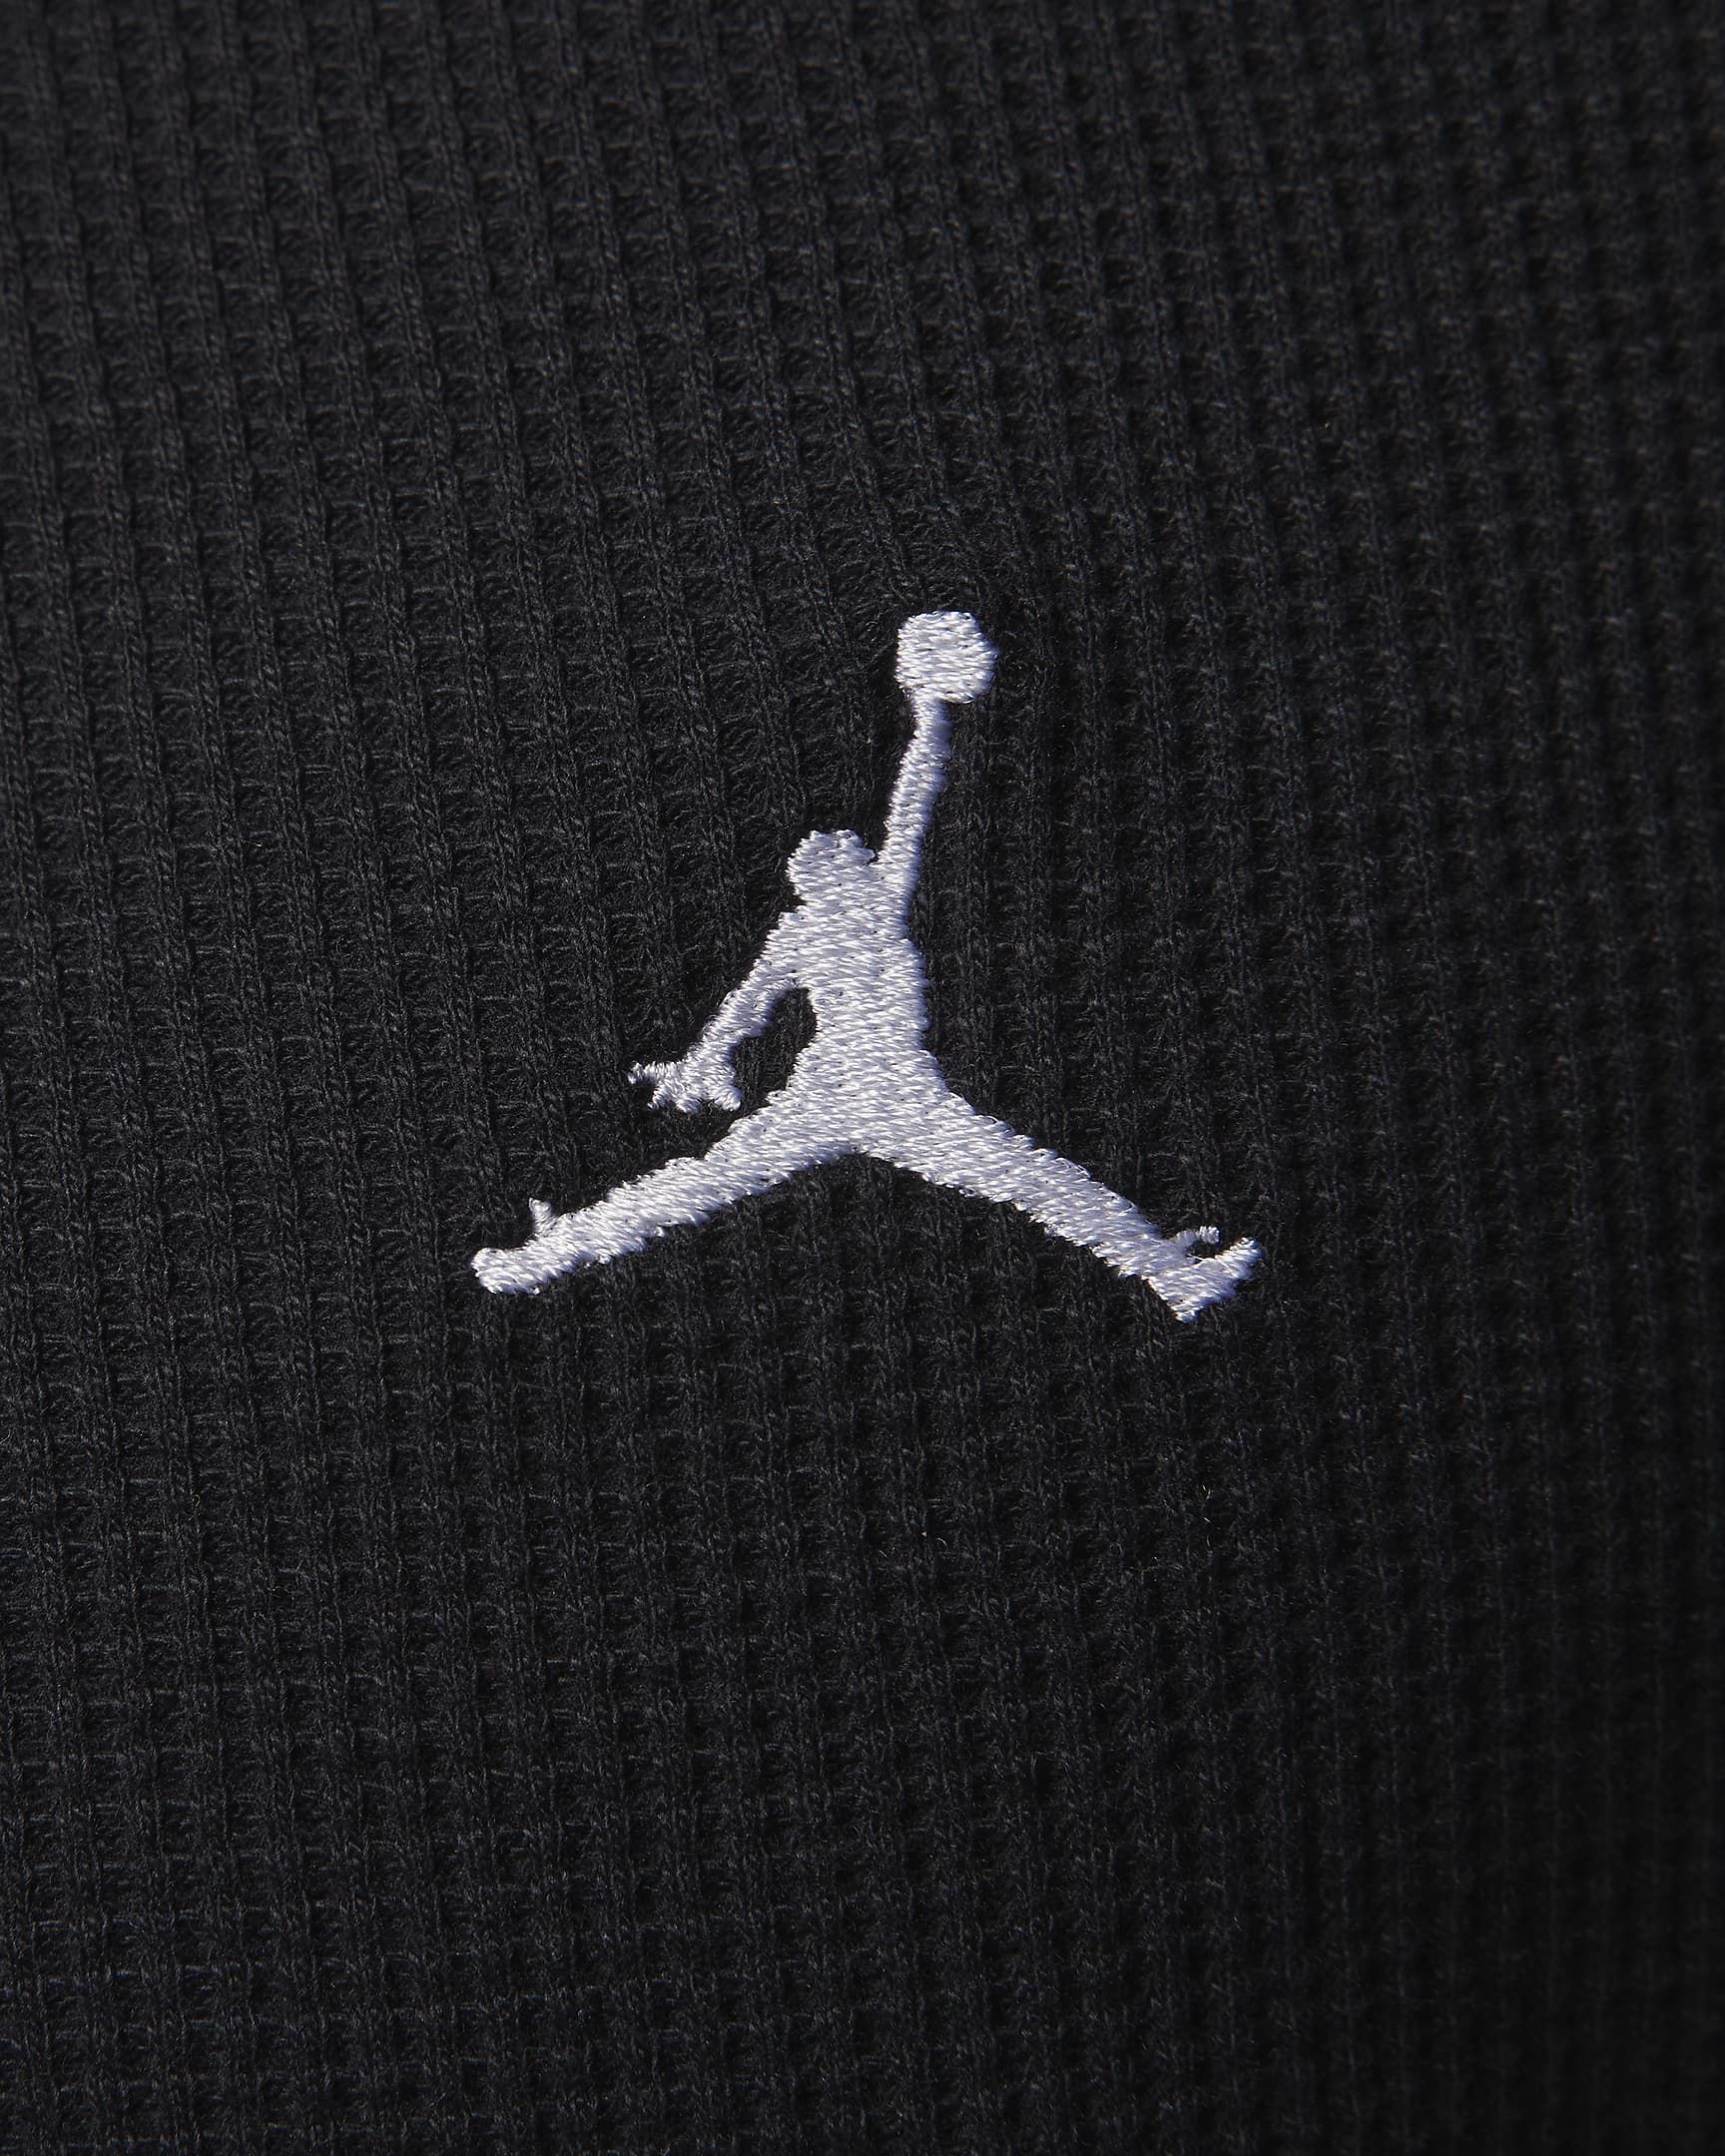 Jordan Essentials Men's Waffle Knit Top. Nike VN